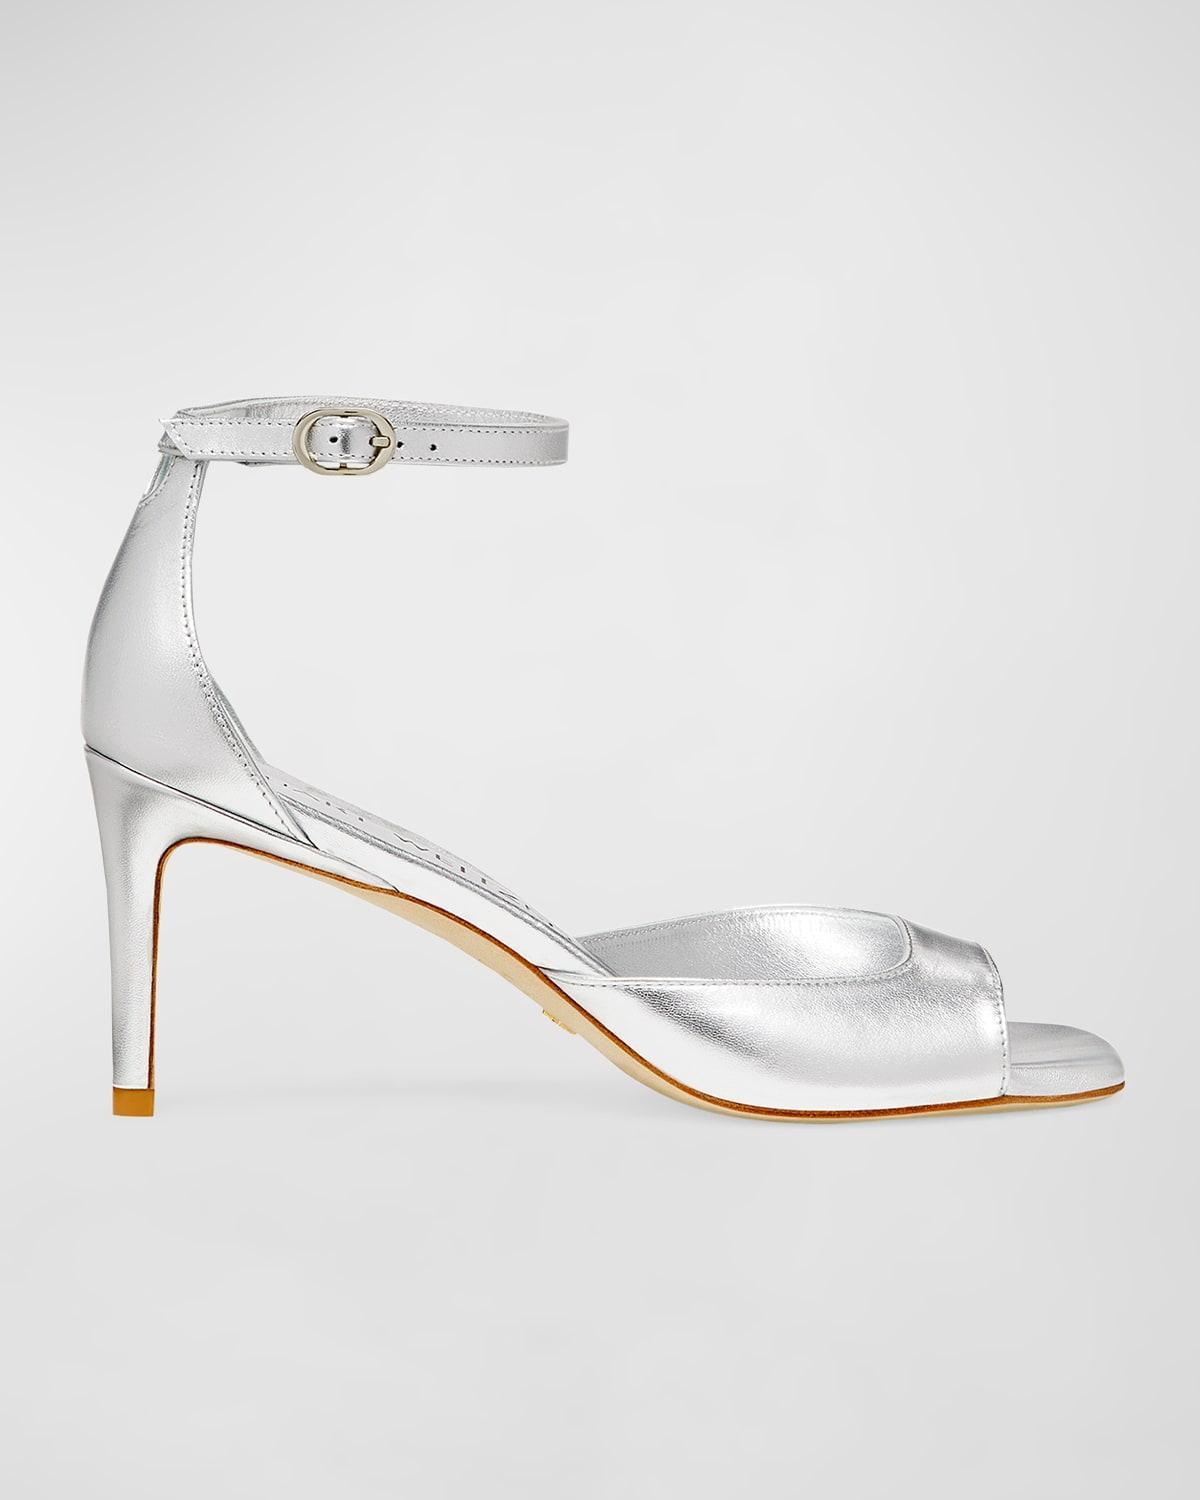 Nudistia Metallic Ankle-Strap Sandals Product Image